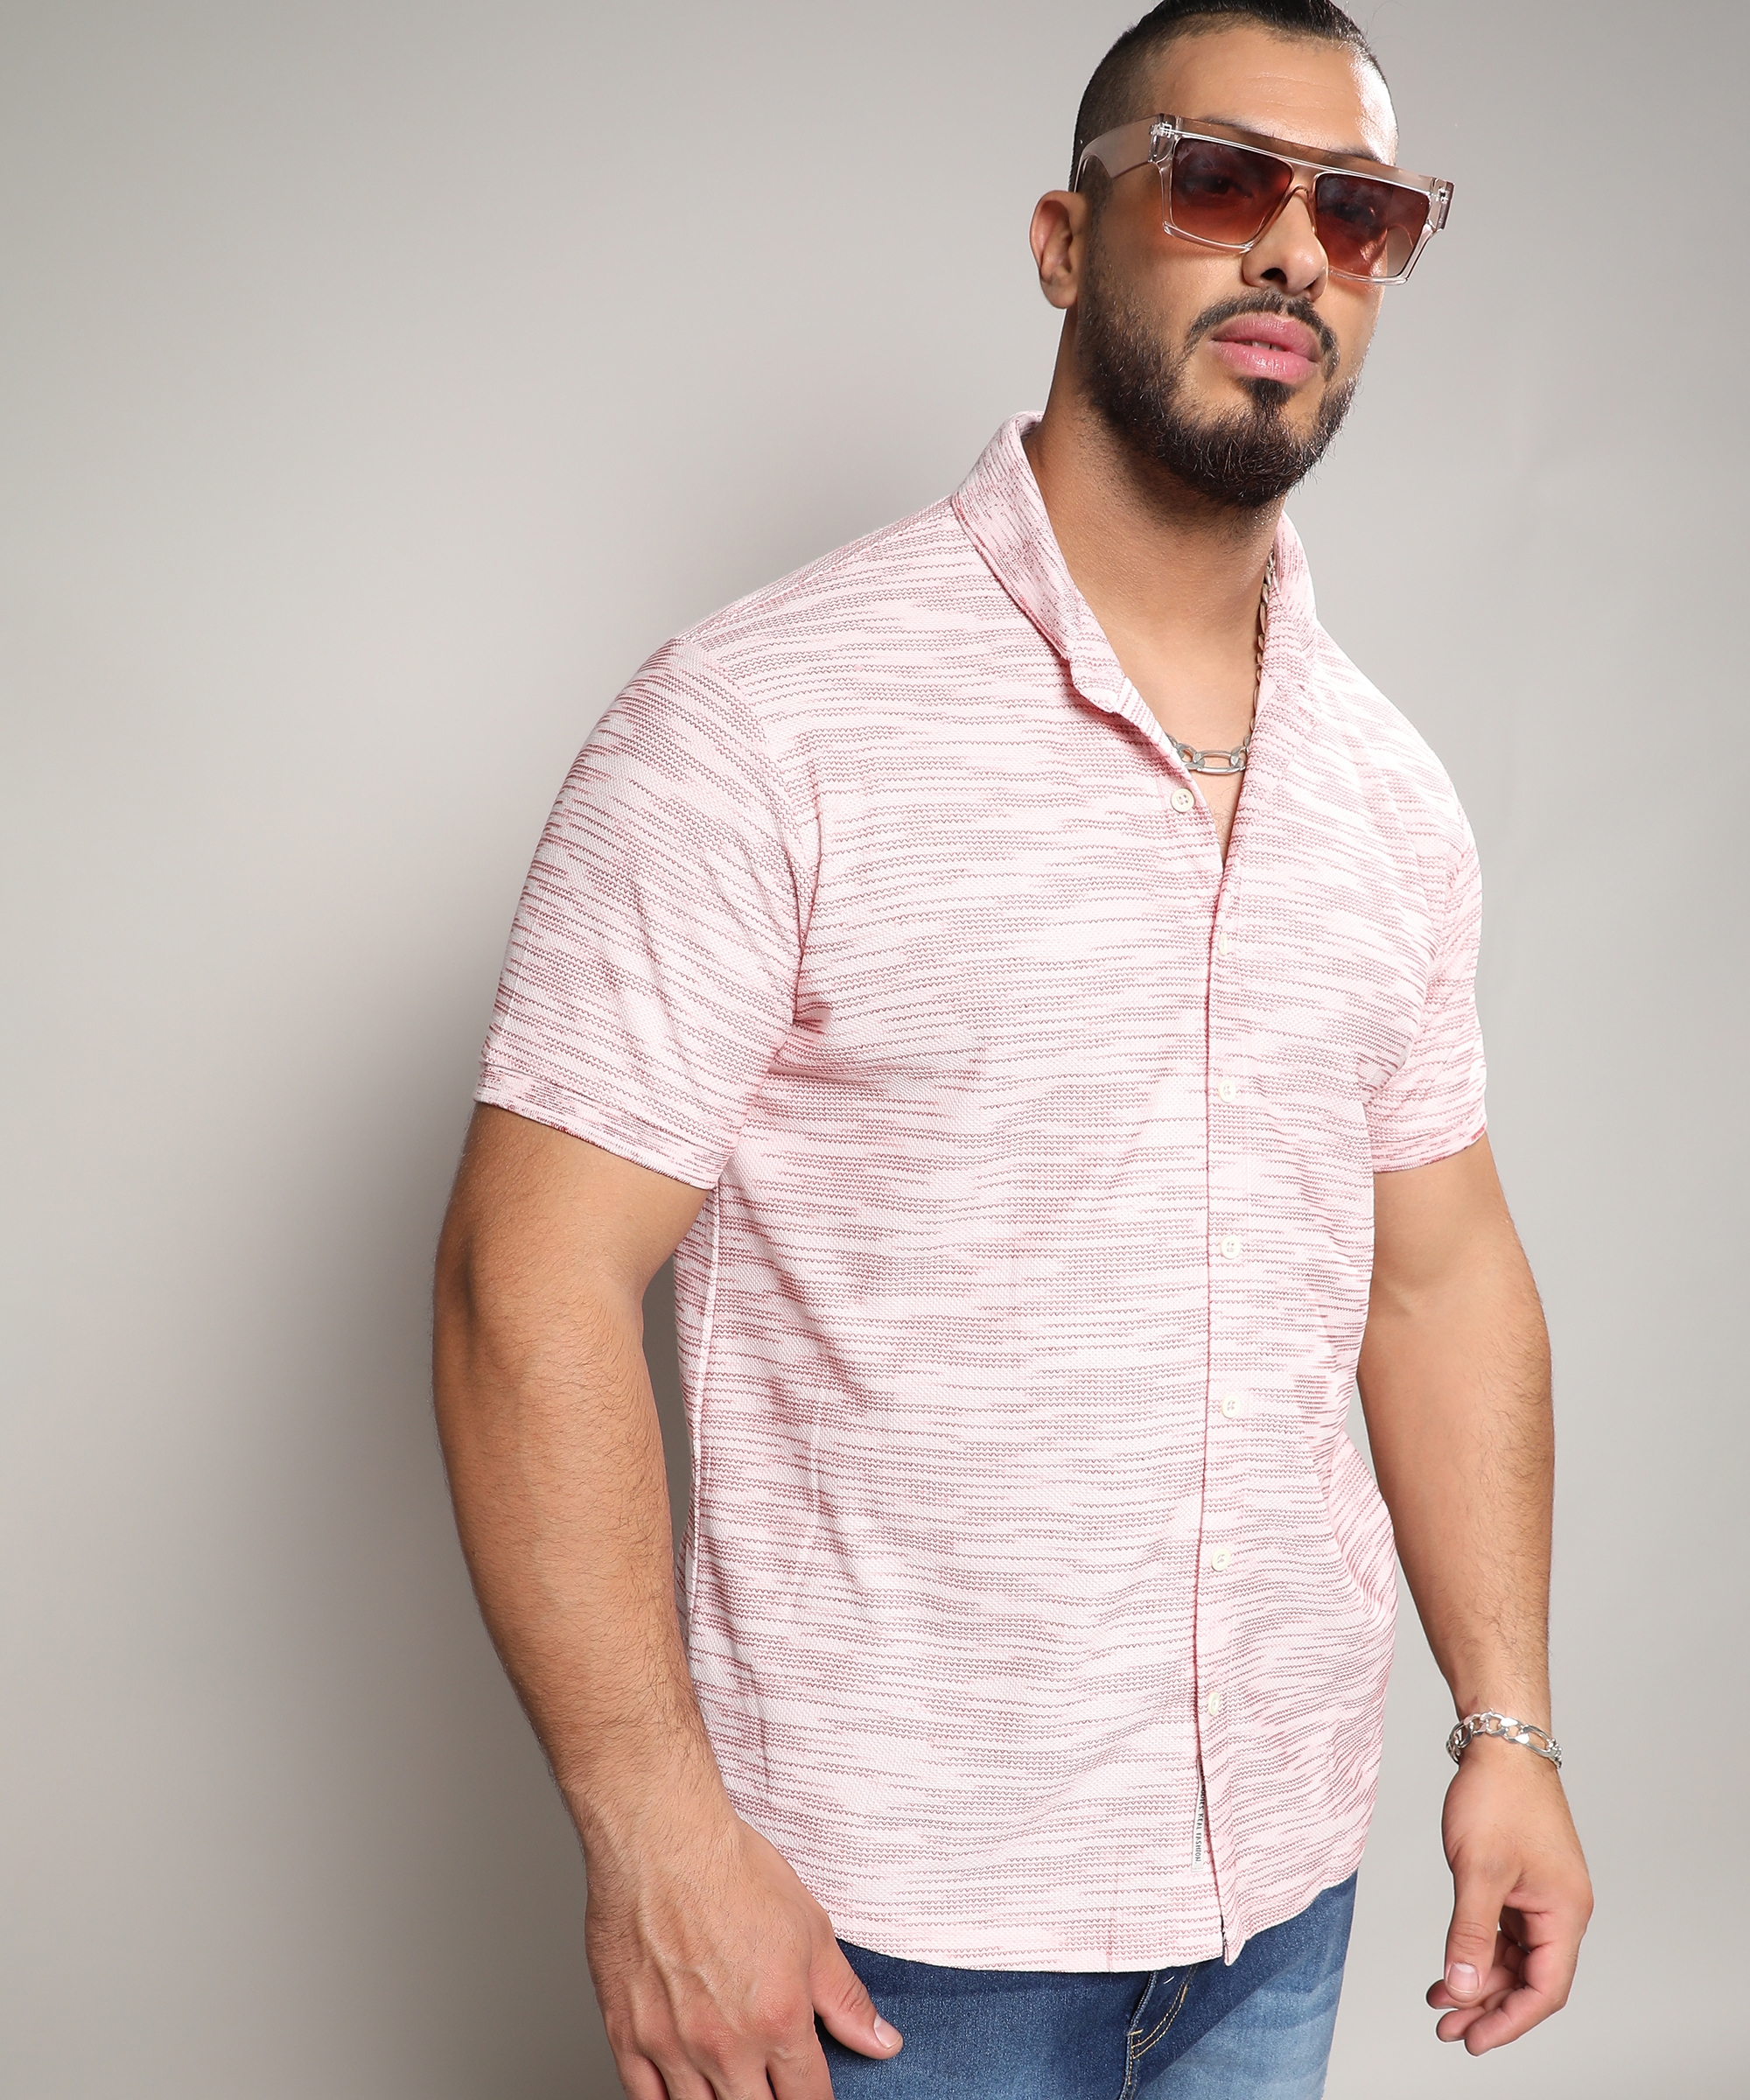 Instafab Plus | Men's Blush Pink Textured Horizontal Striped Shirt